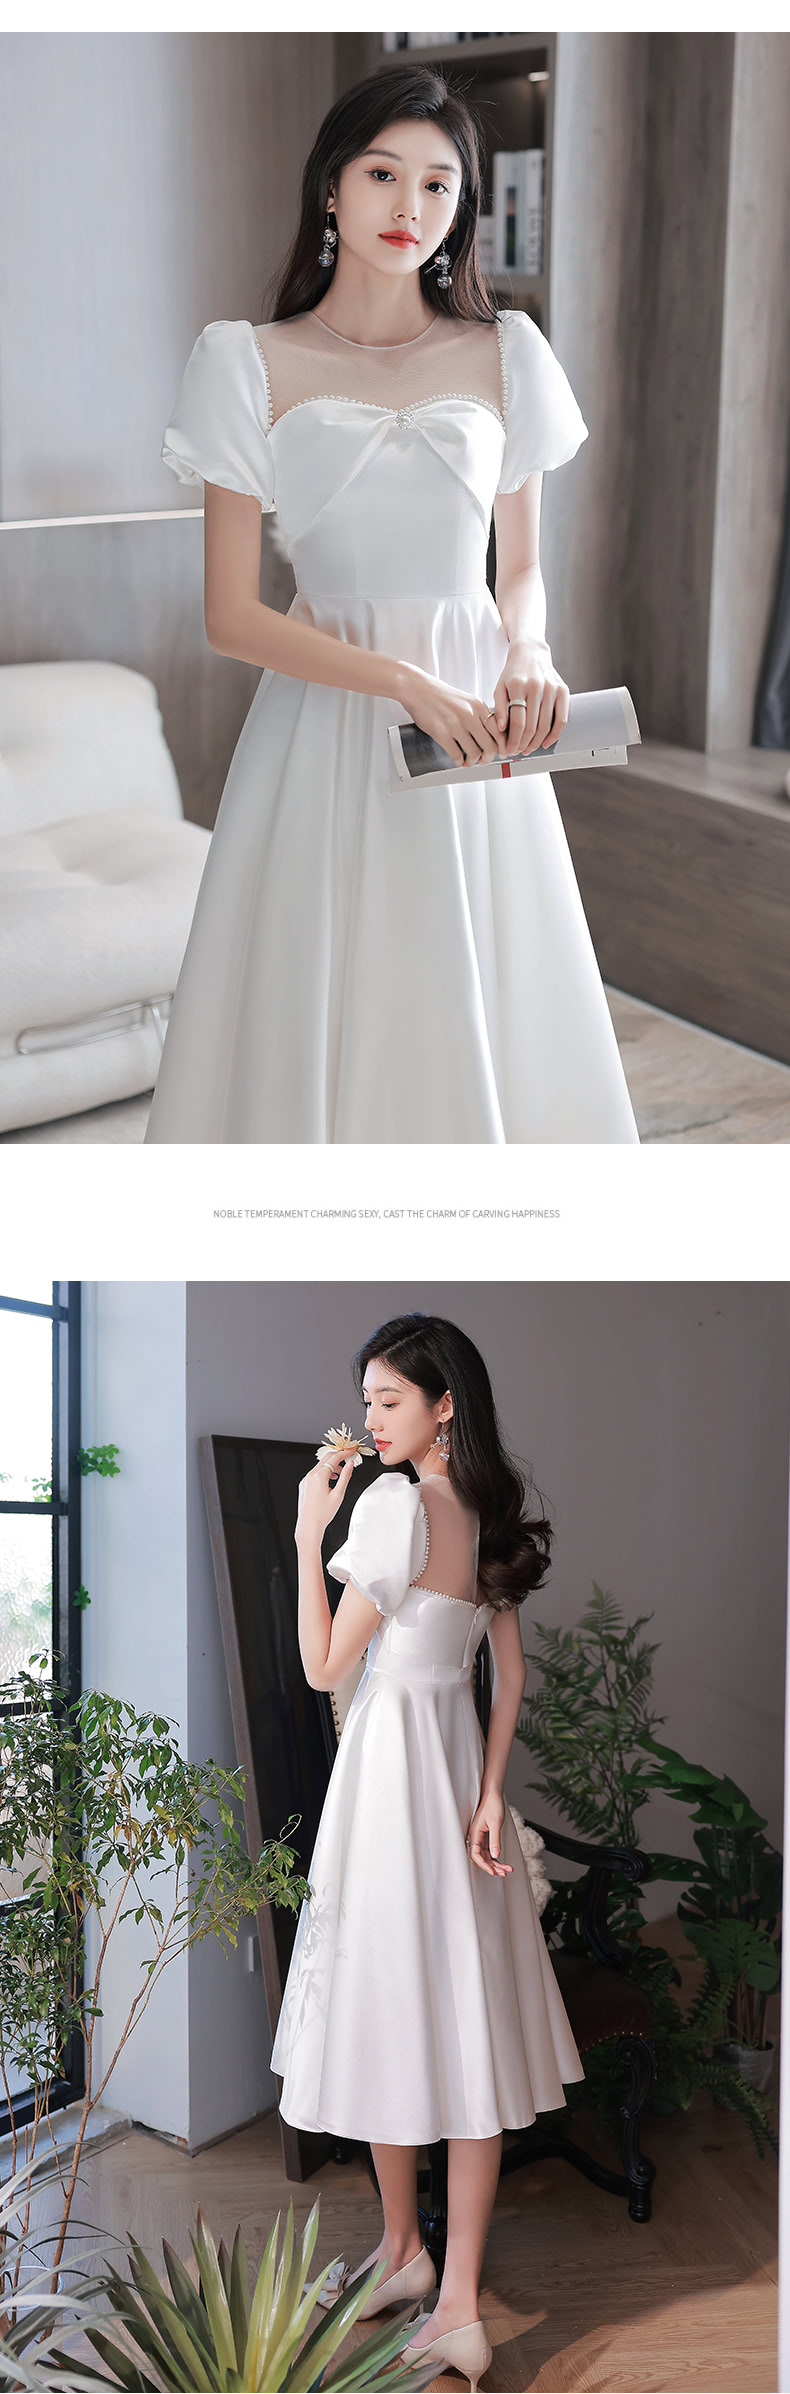 Simple-Elegant-White-Satin-Prom-Dress-Midi-Evening-Ball-Gown14.jpg